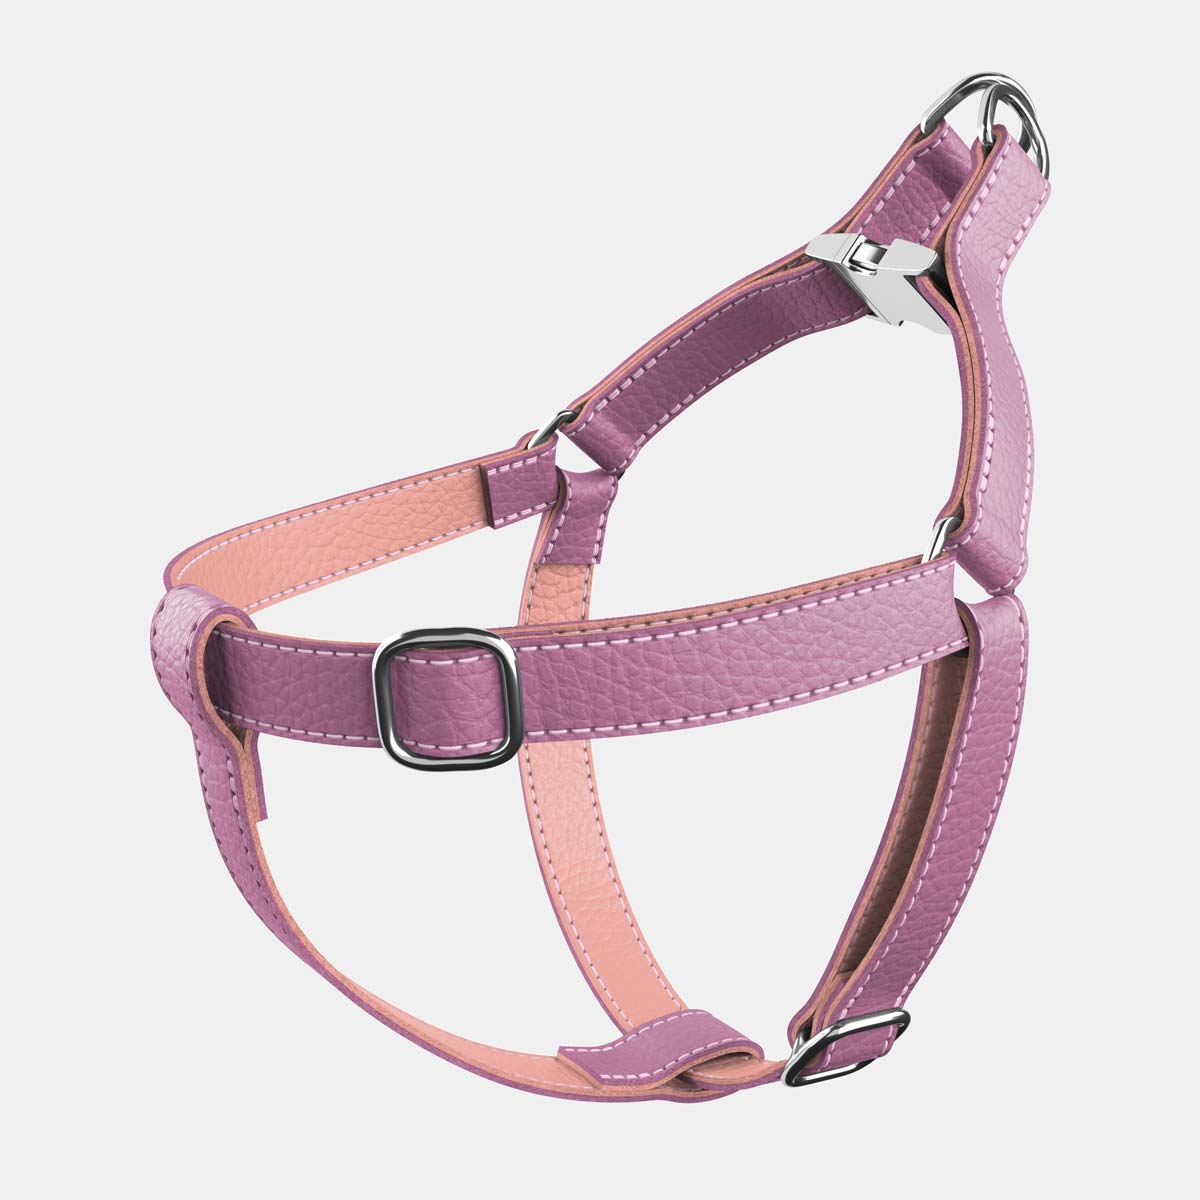 Leather Dog Poop Bag Holder - Purple and Pink - RYAN London